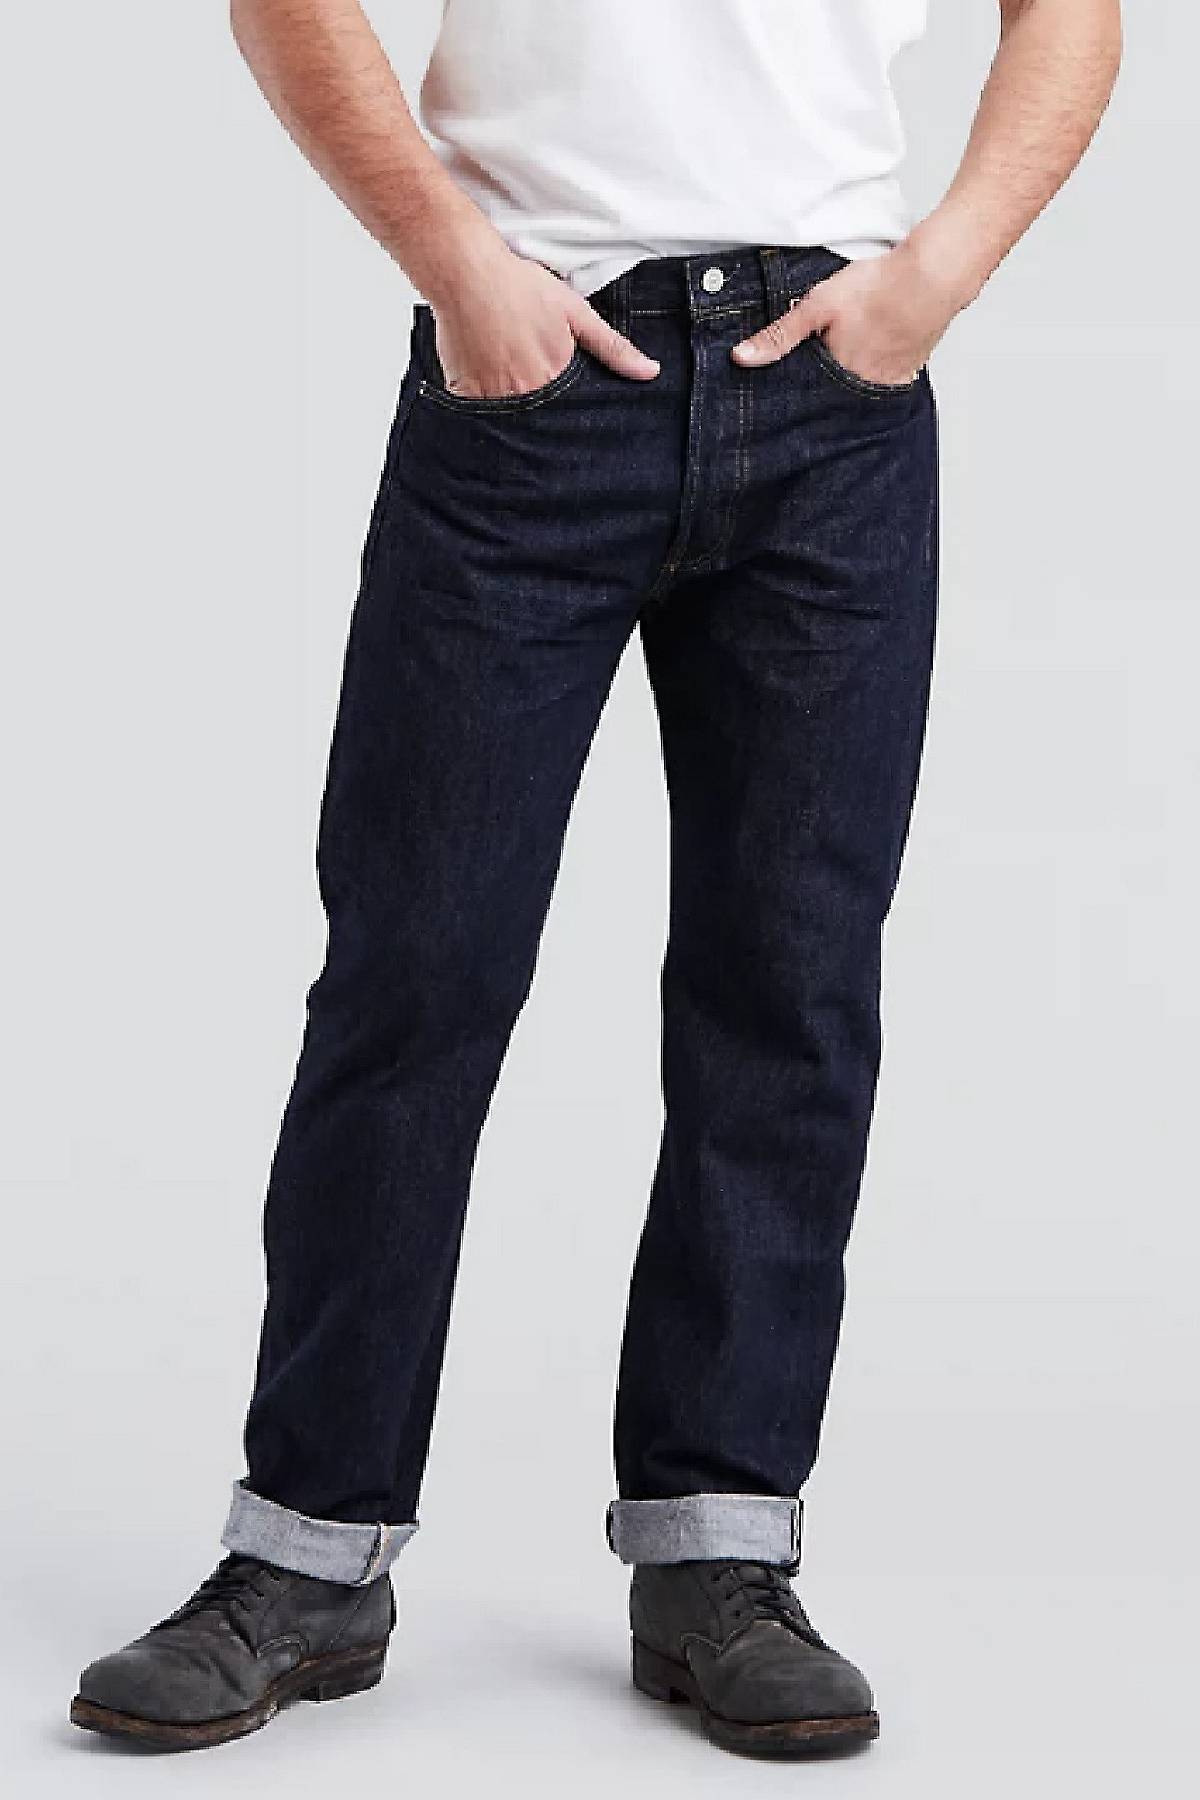 Model wearing 501® Original jeans